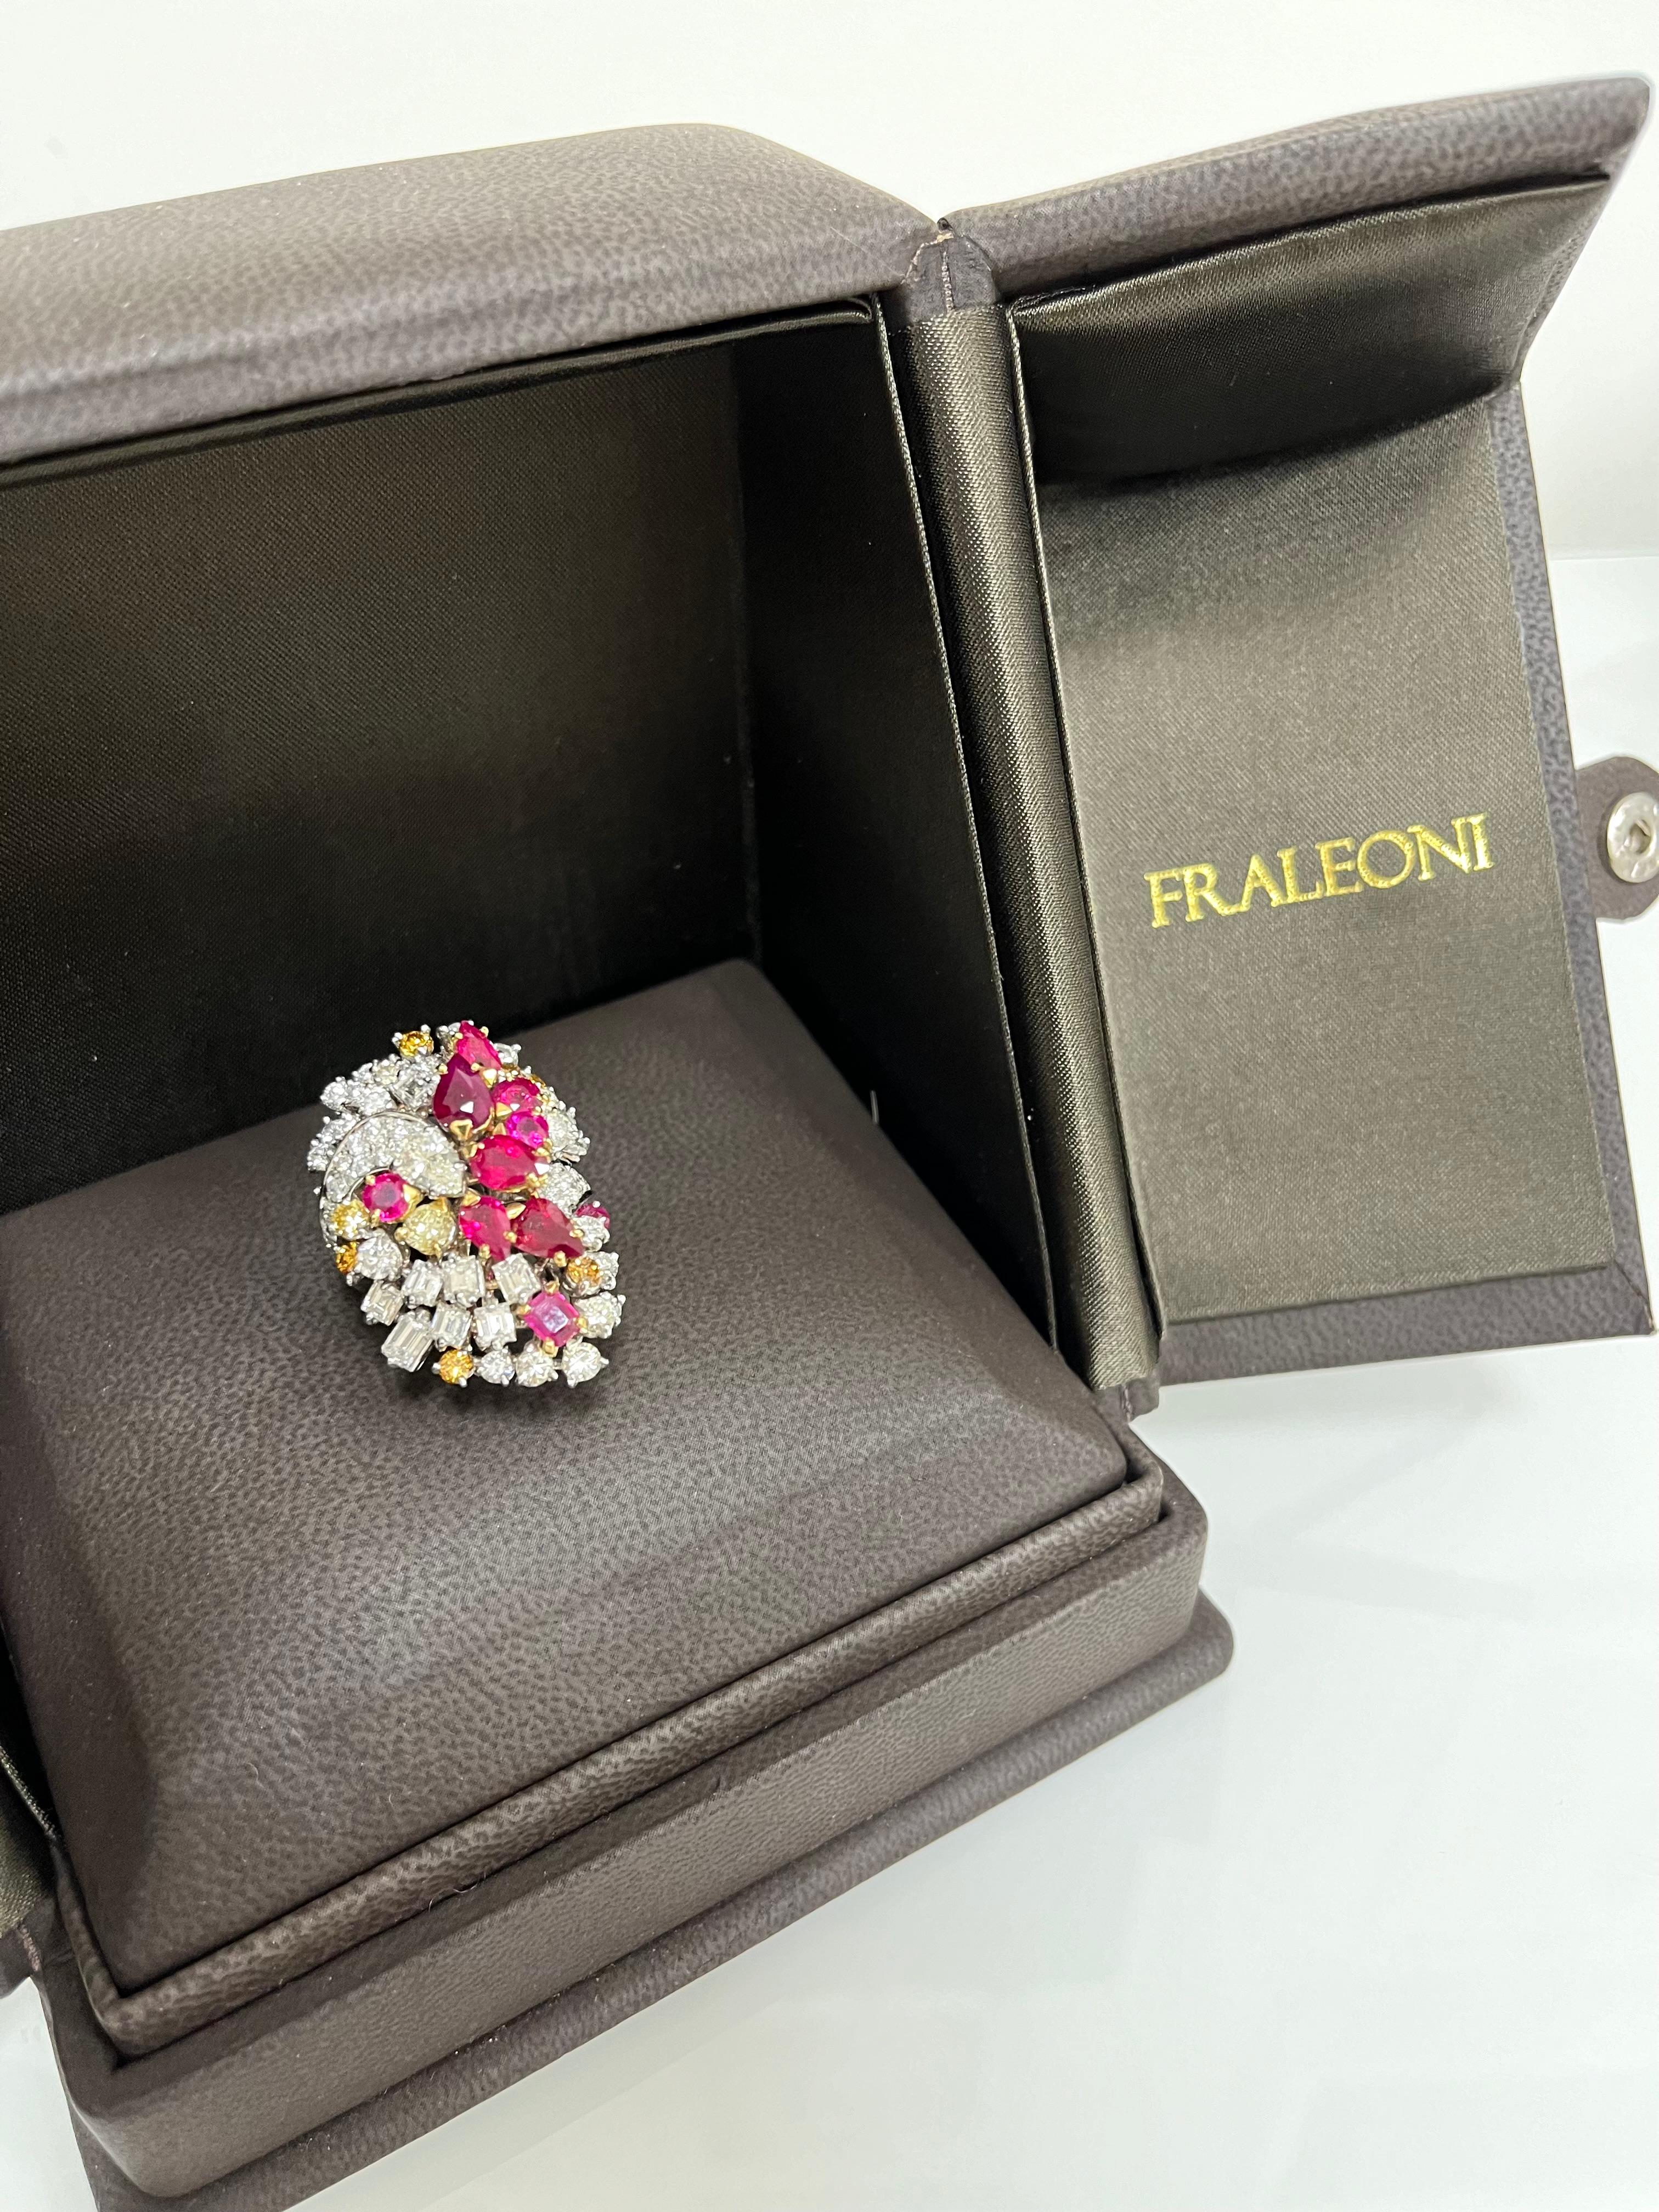 Fraleoni 18 Kt. White Gold Diamonds Rubies Cocktail Ring For Sale 7